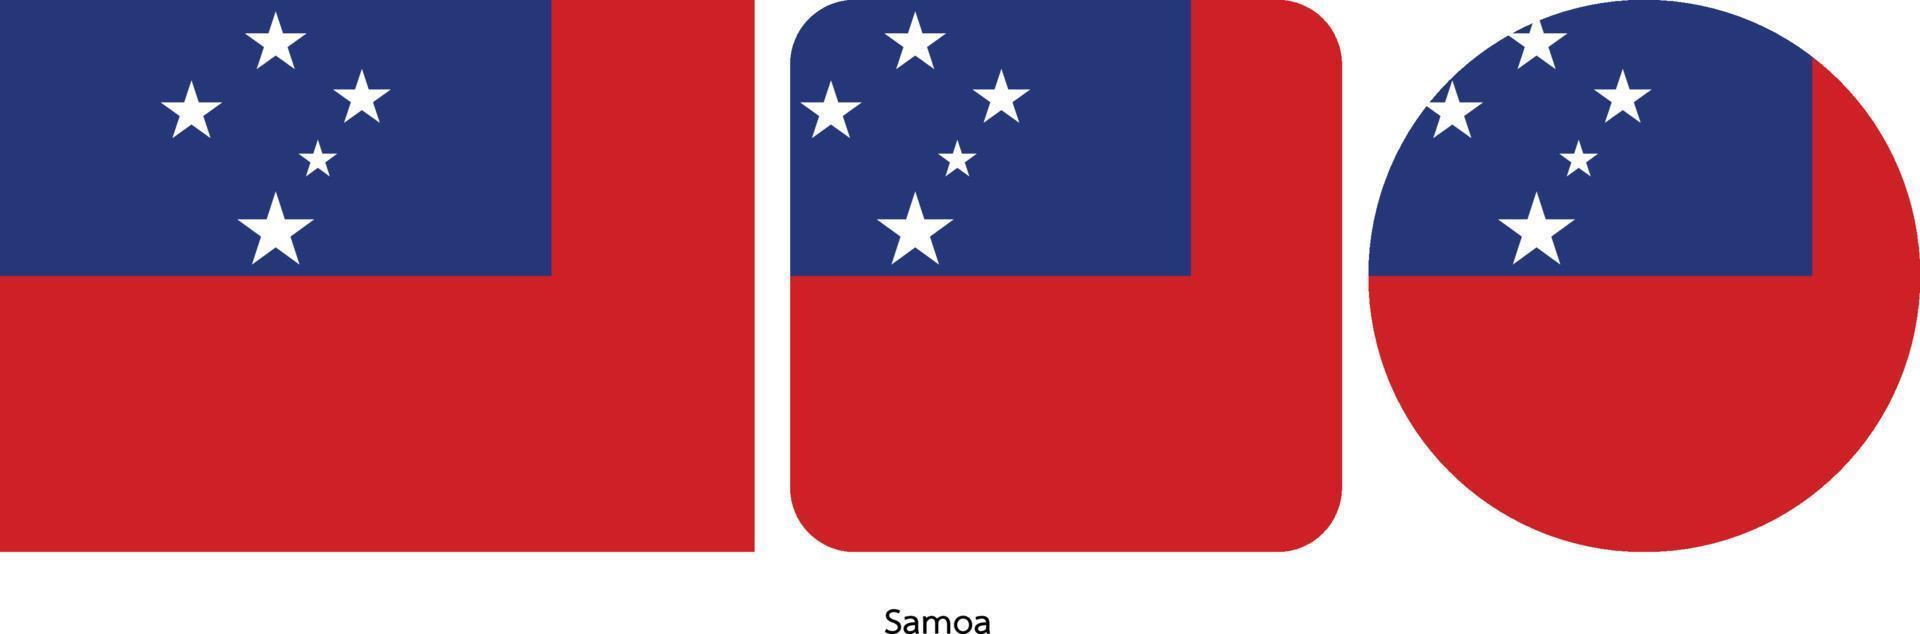 Samoa-Flagge, Vektorillustration vektor